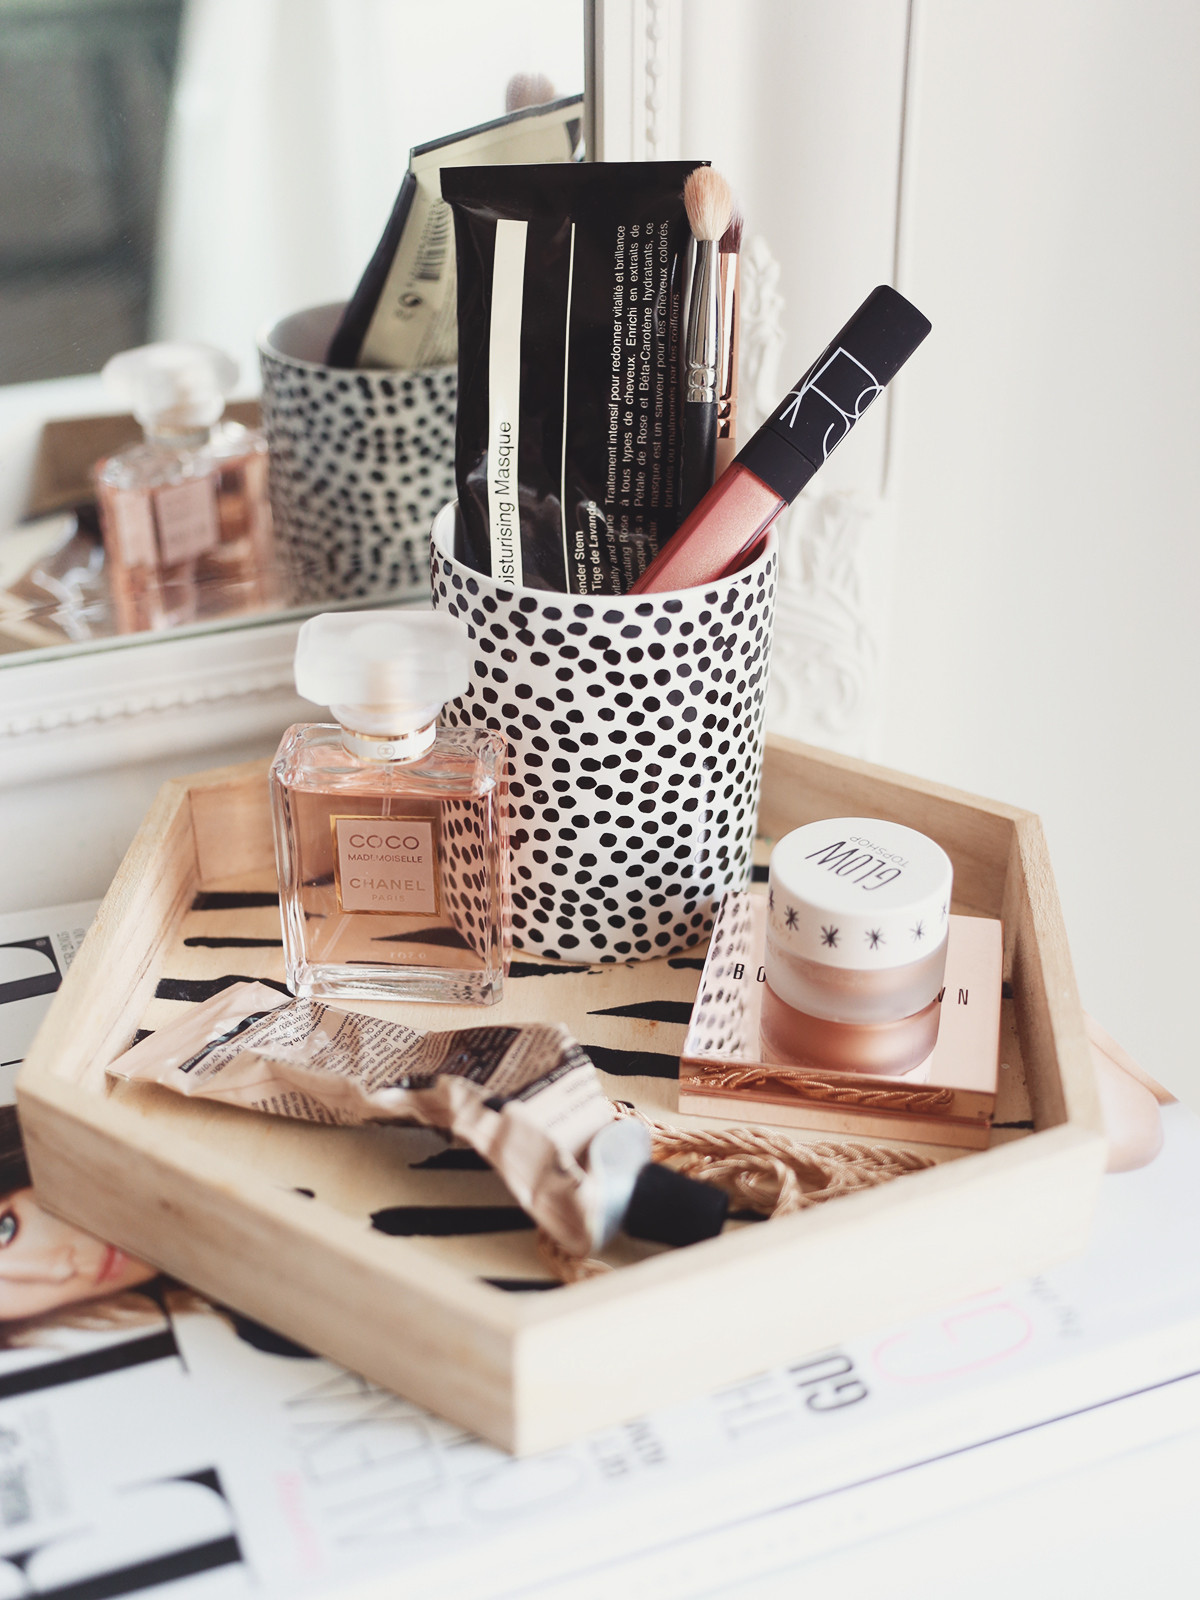 DIY Makeup Organization Ideas
 10 Easy DIY Makeup Organizer Ideas You’ll Want to Copy